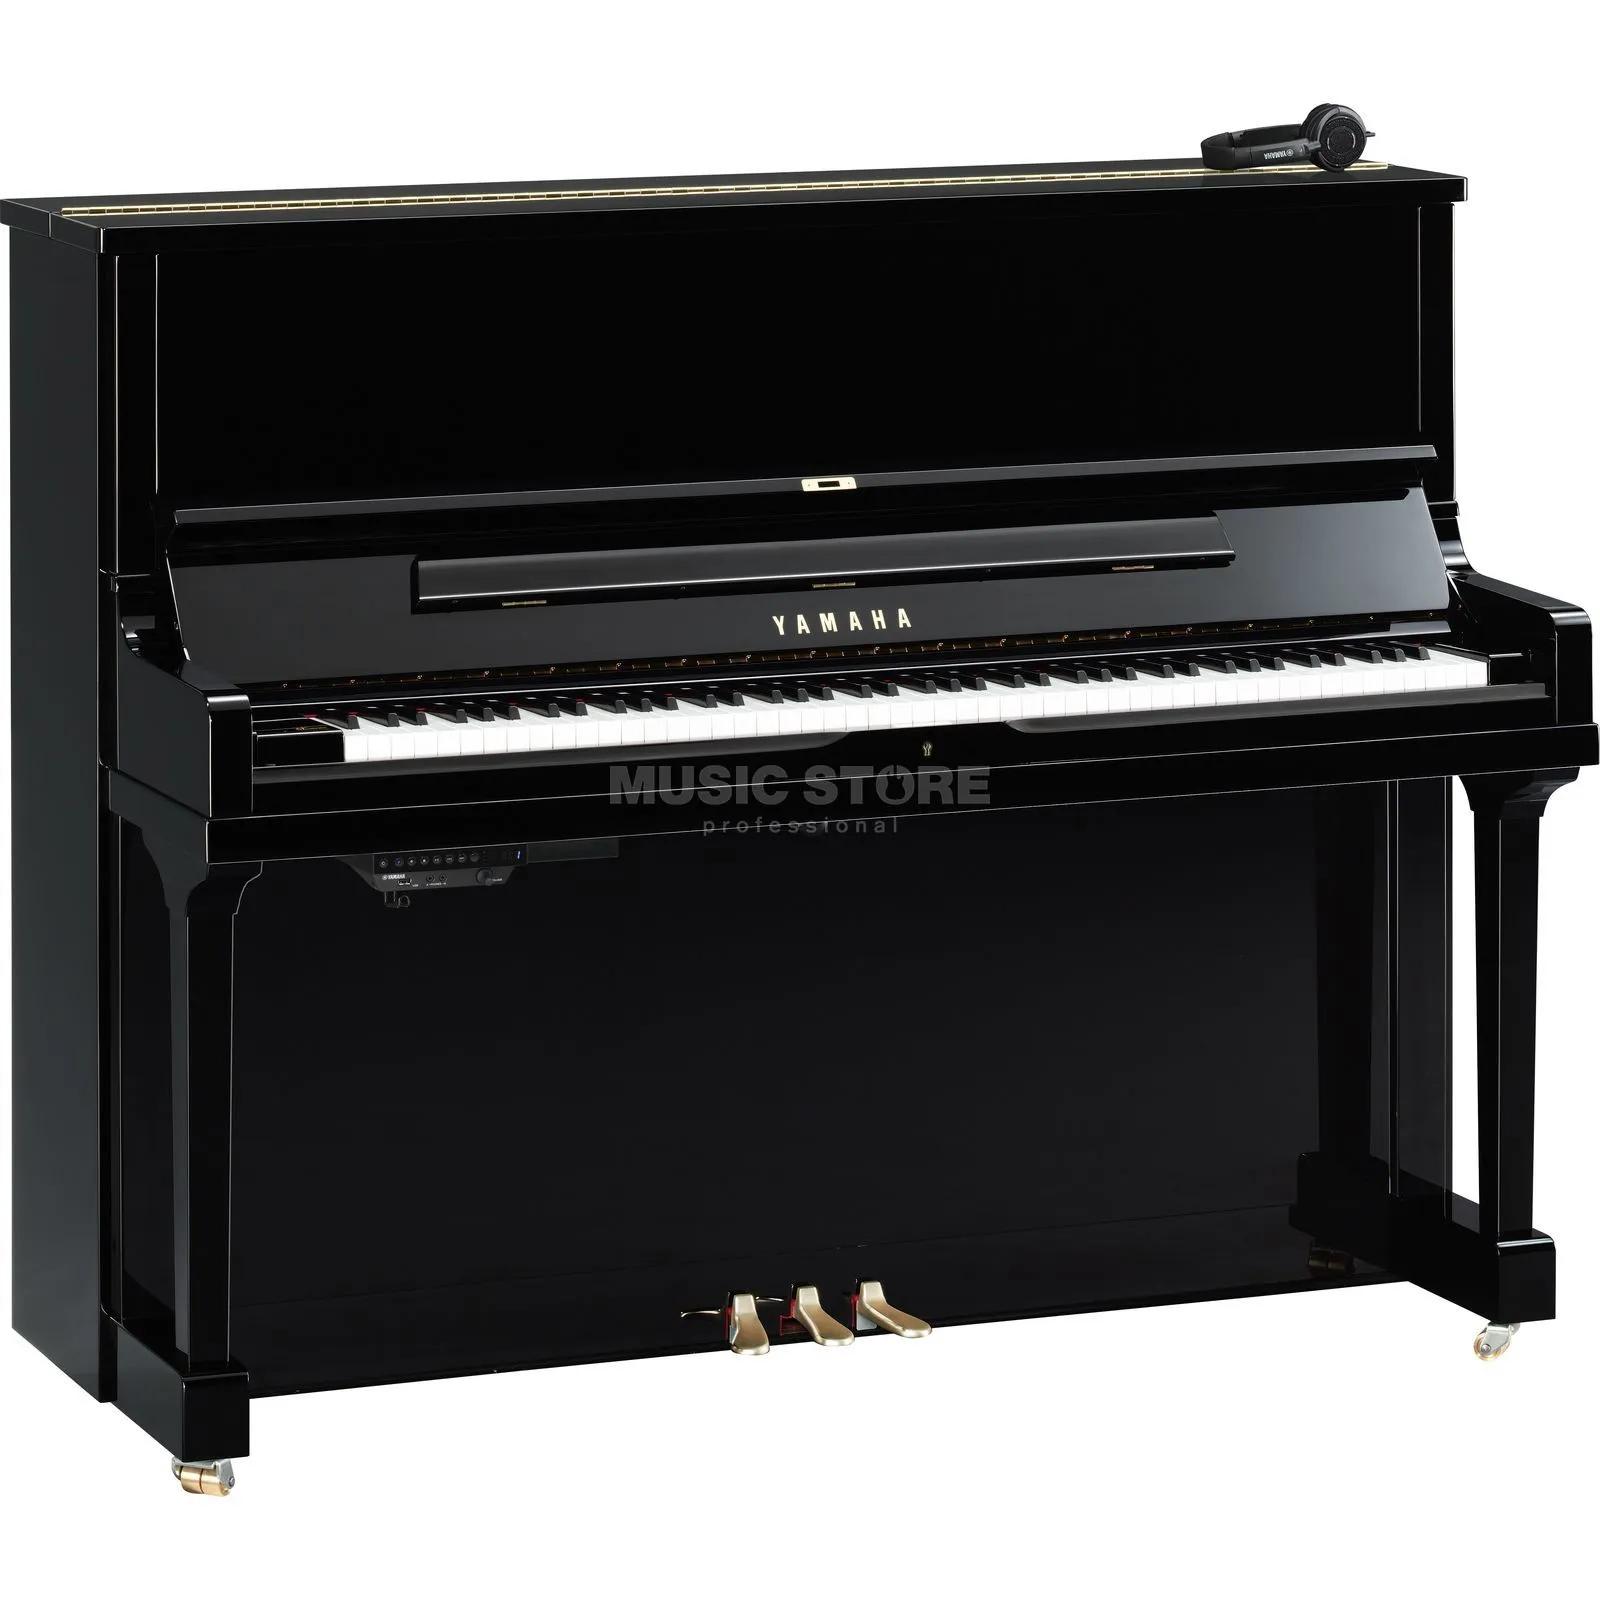 Yamaha SE 122 PE Klavier 122cm schwarz poliert | MUSIC STORE professional